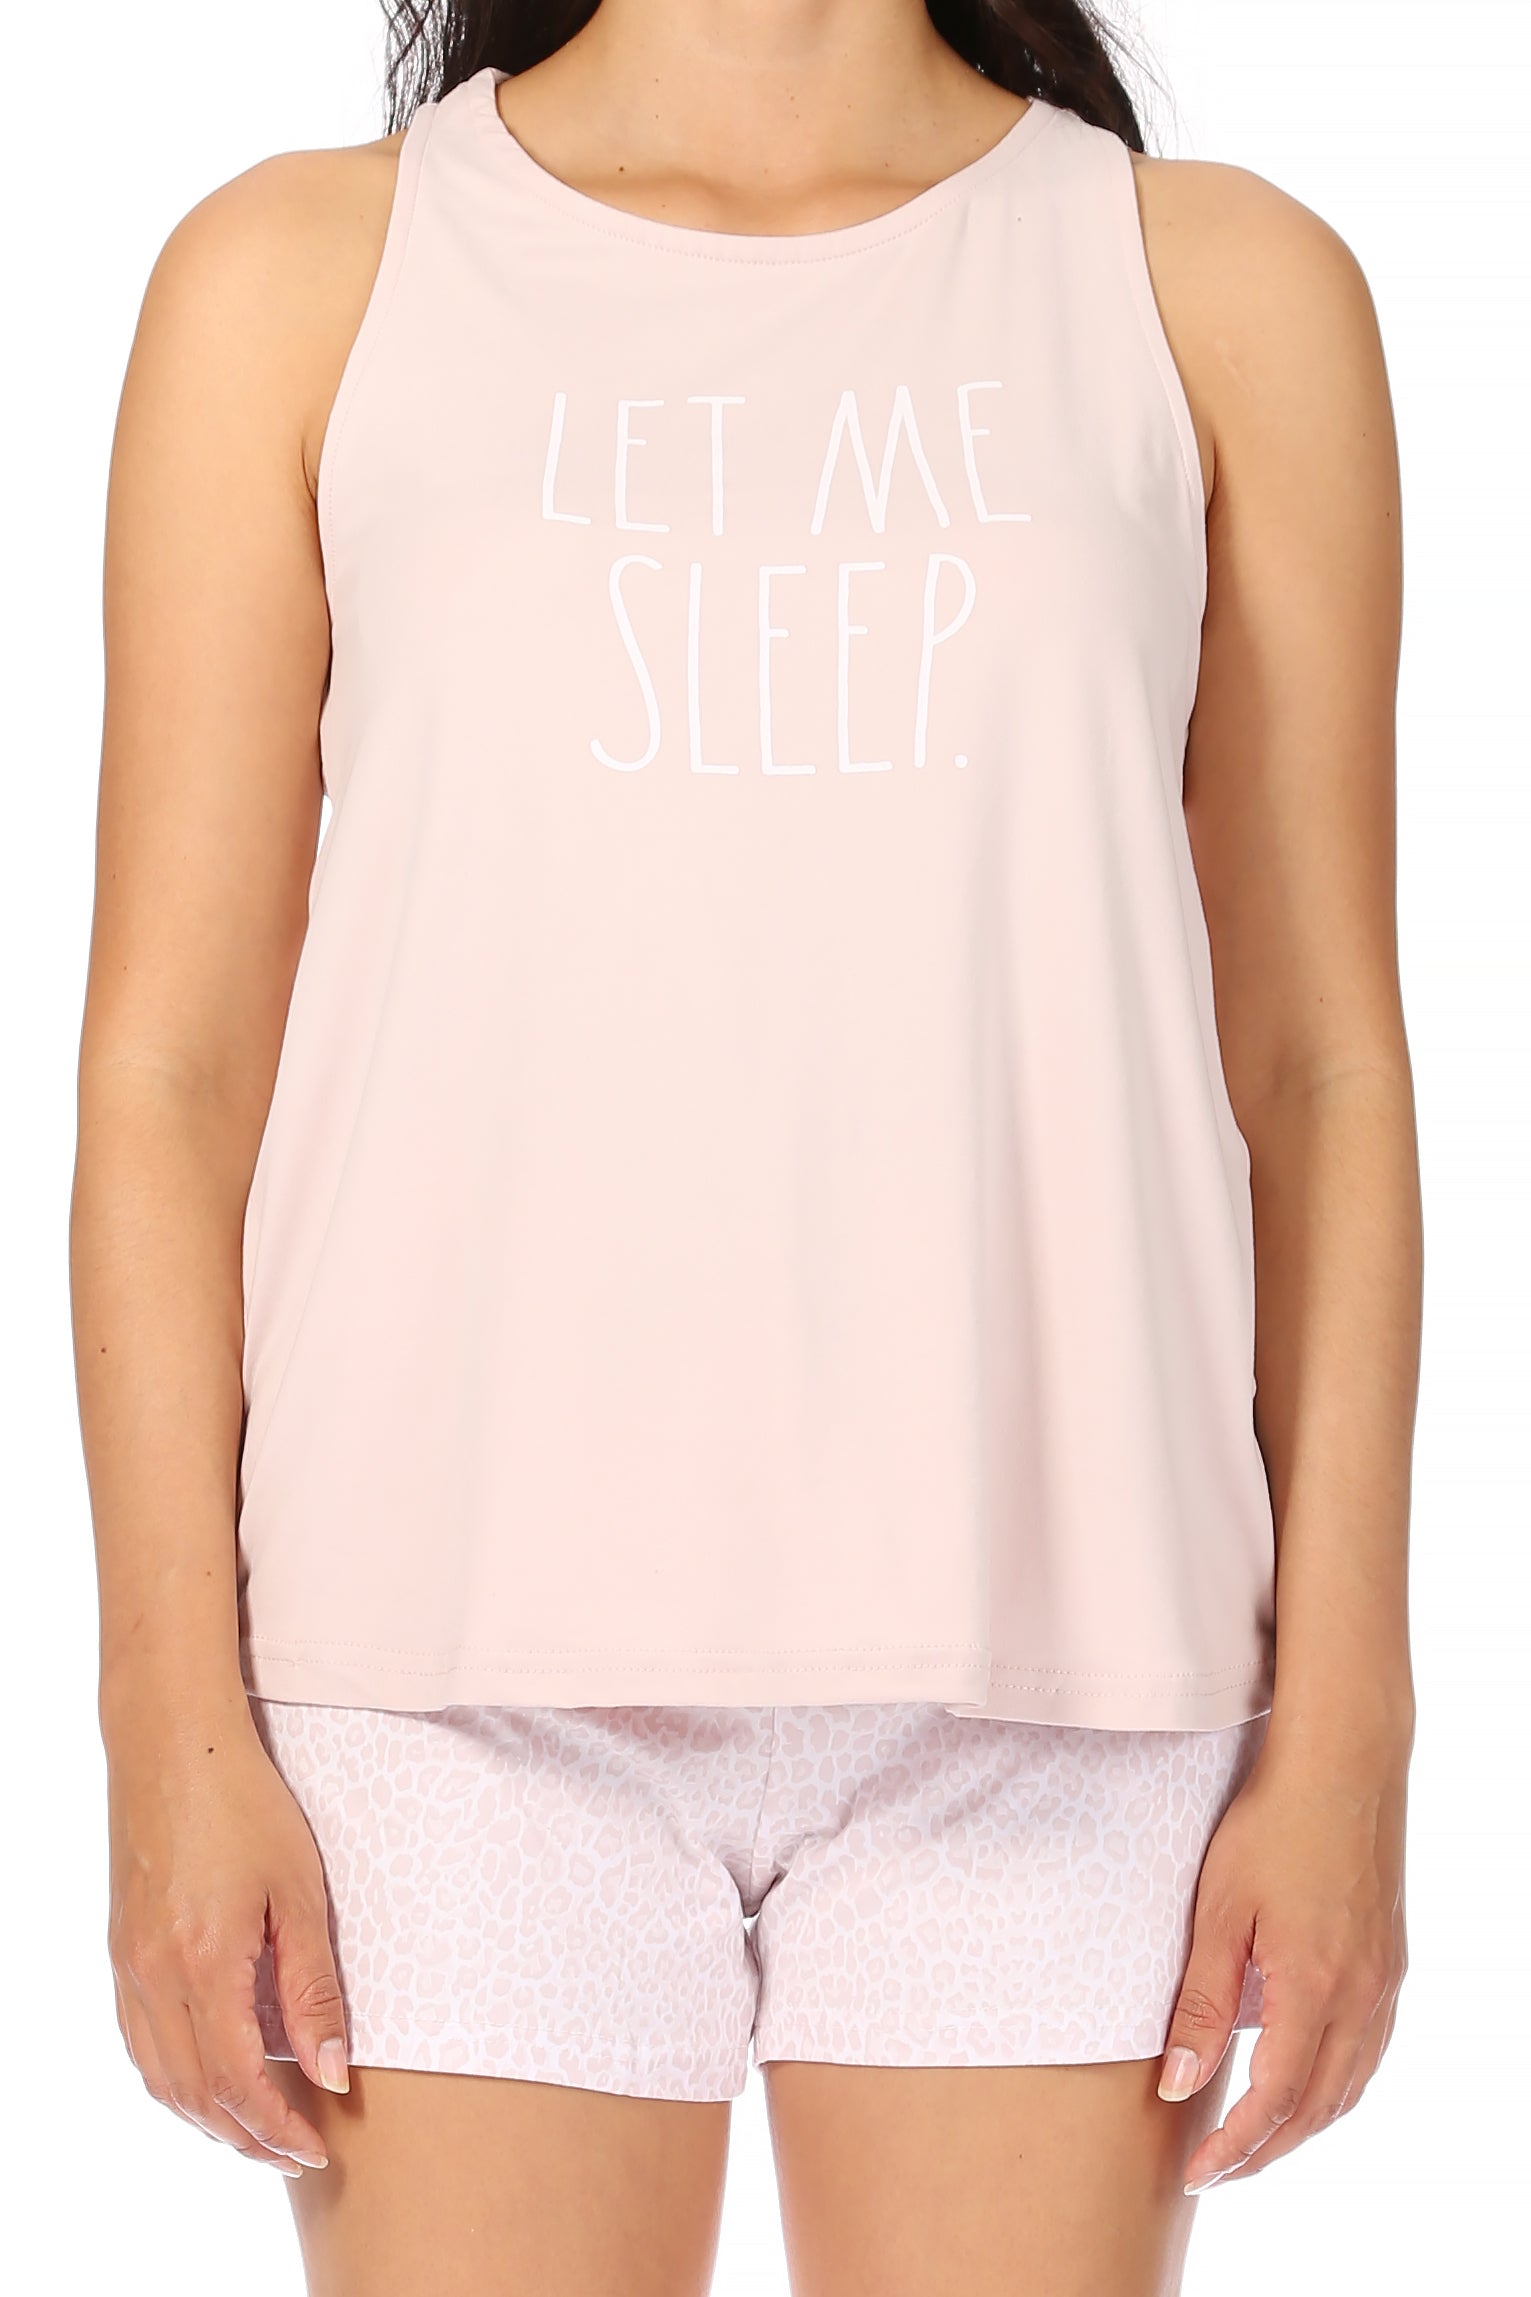 Women's "LET ME SLEEP" Tank and Drawstring Shorts Pajama Set - Rae Dunn Wear